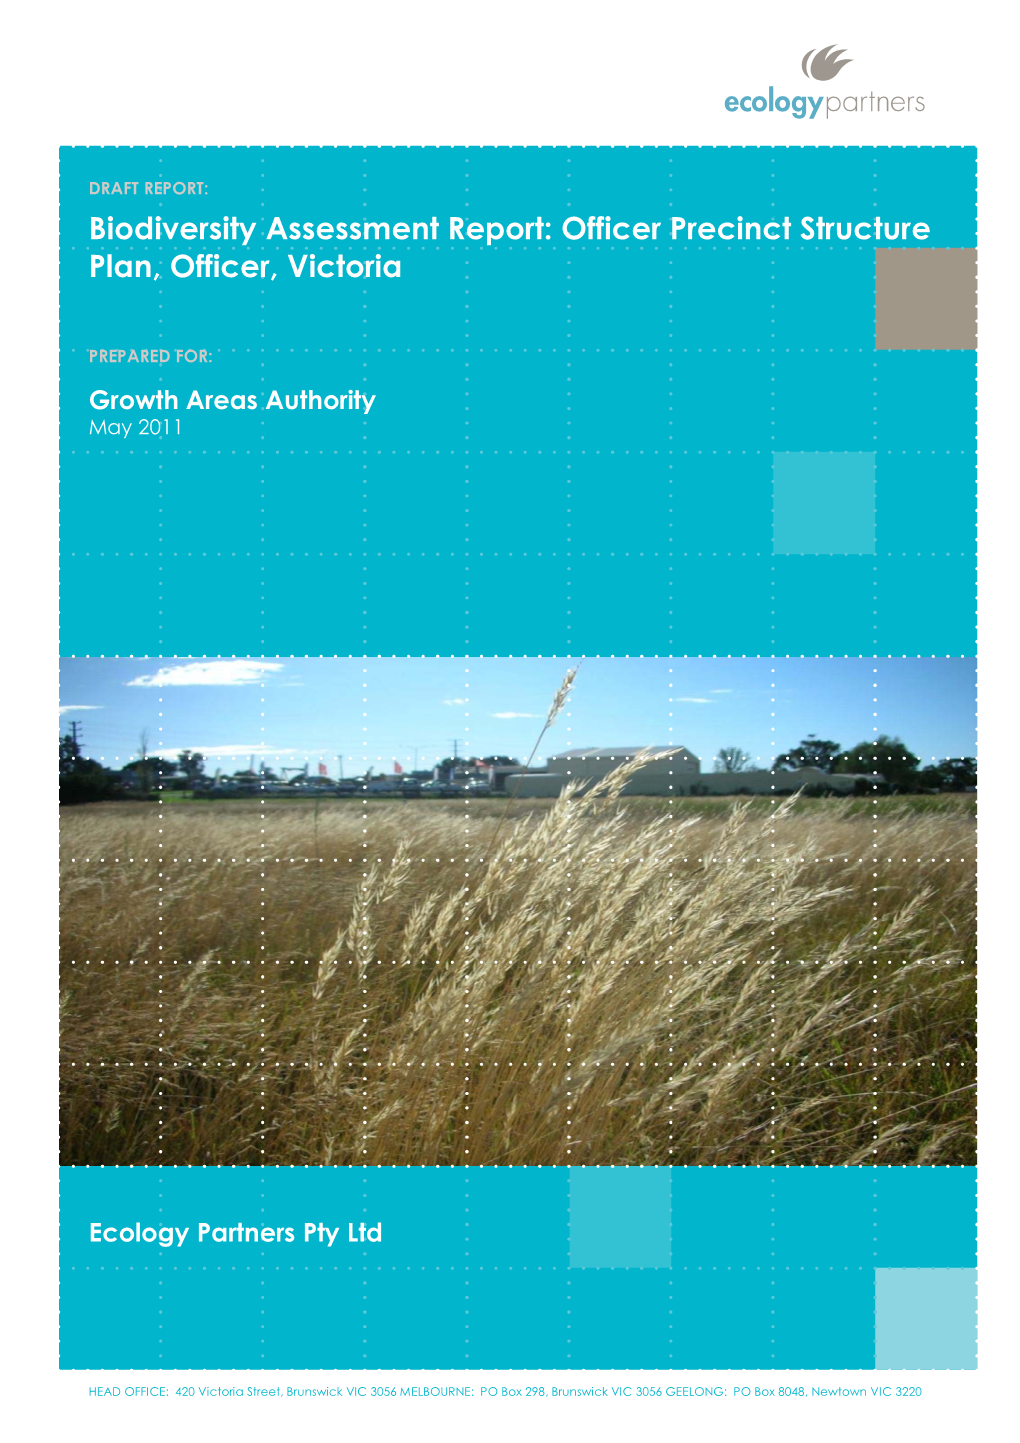 Biodiversity Assessment Report: Officer Precinct Structure Plan, Officer, Victoria